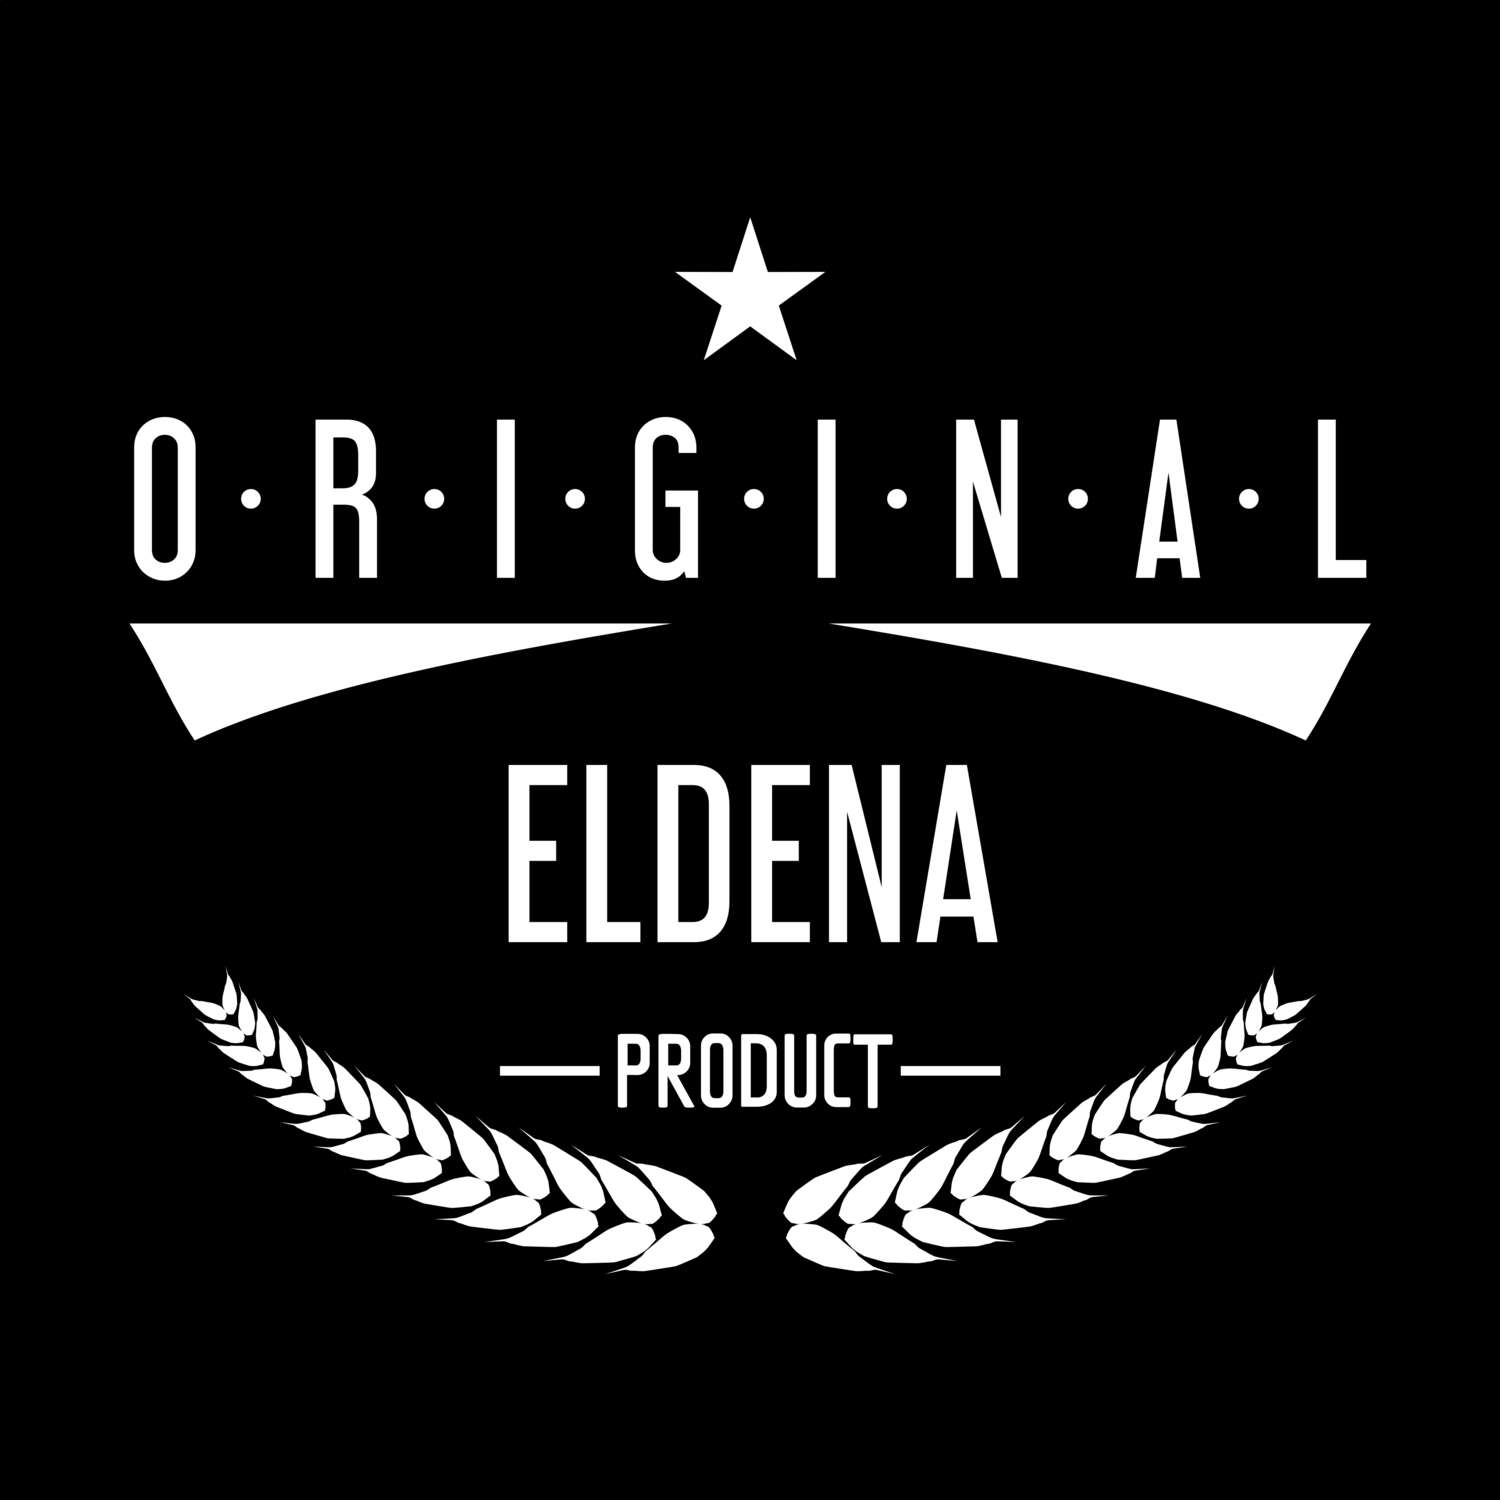 Eldena T-Shirt »Original Product«